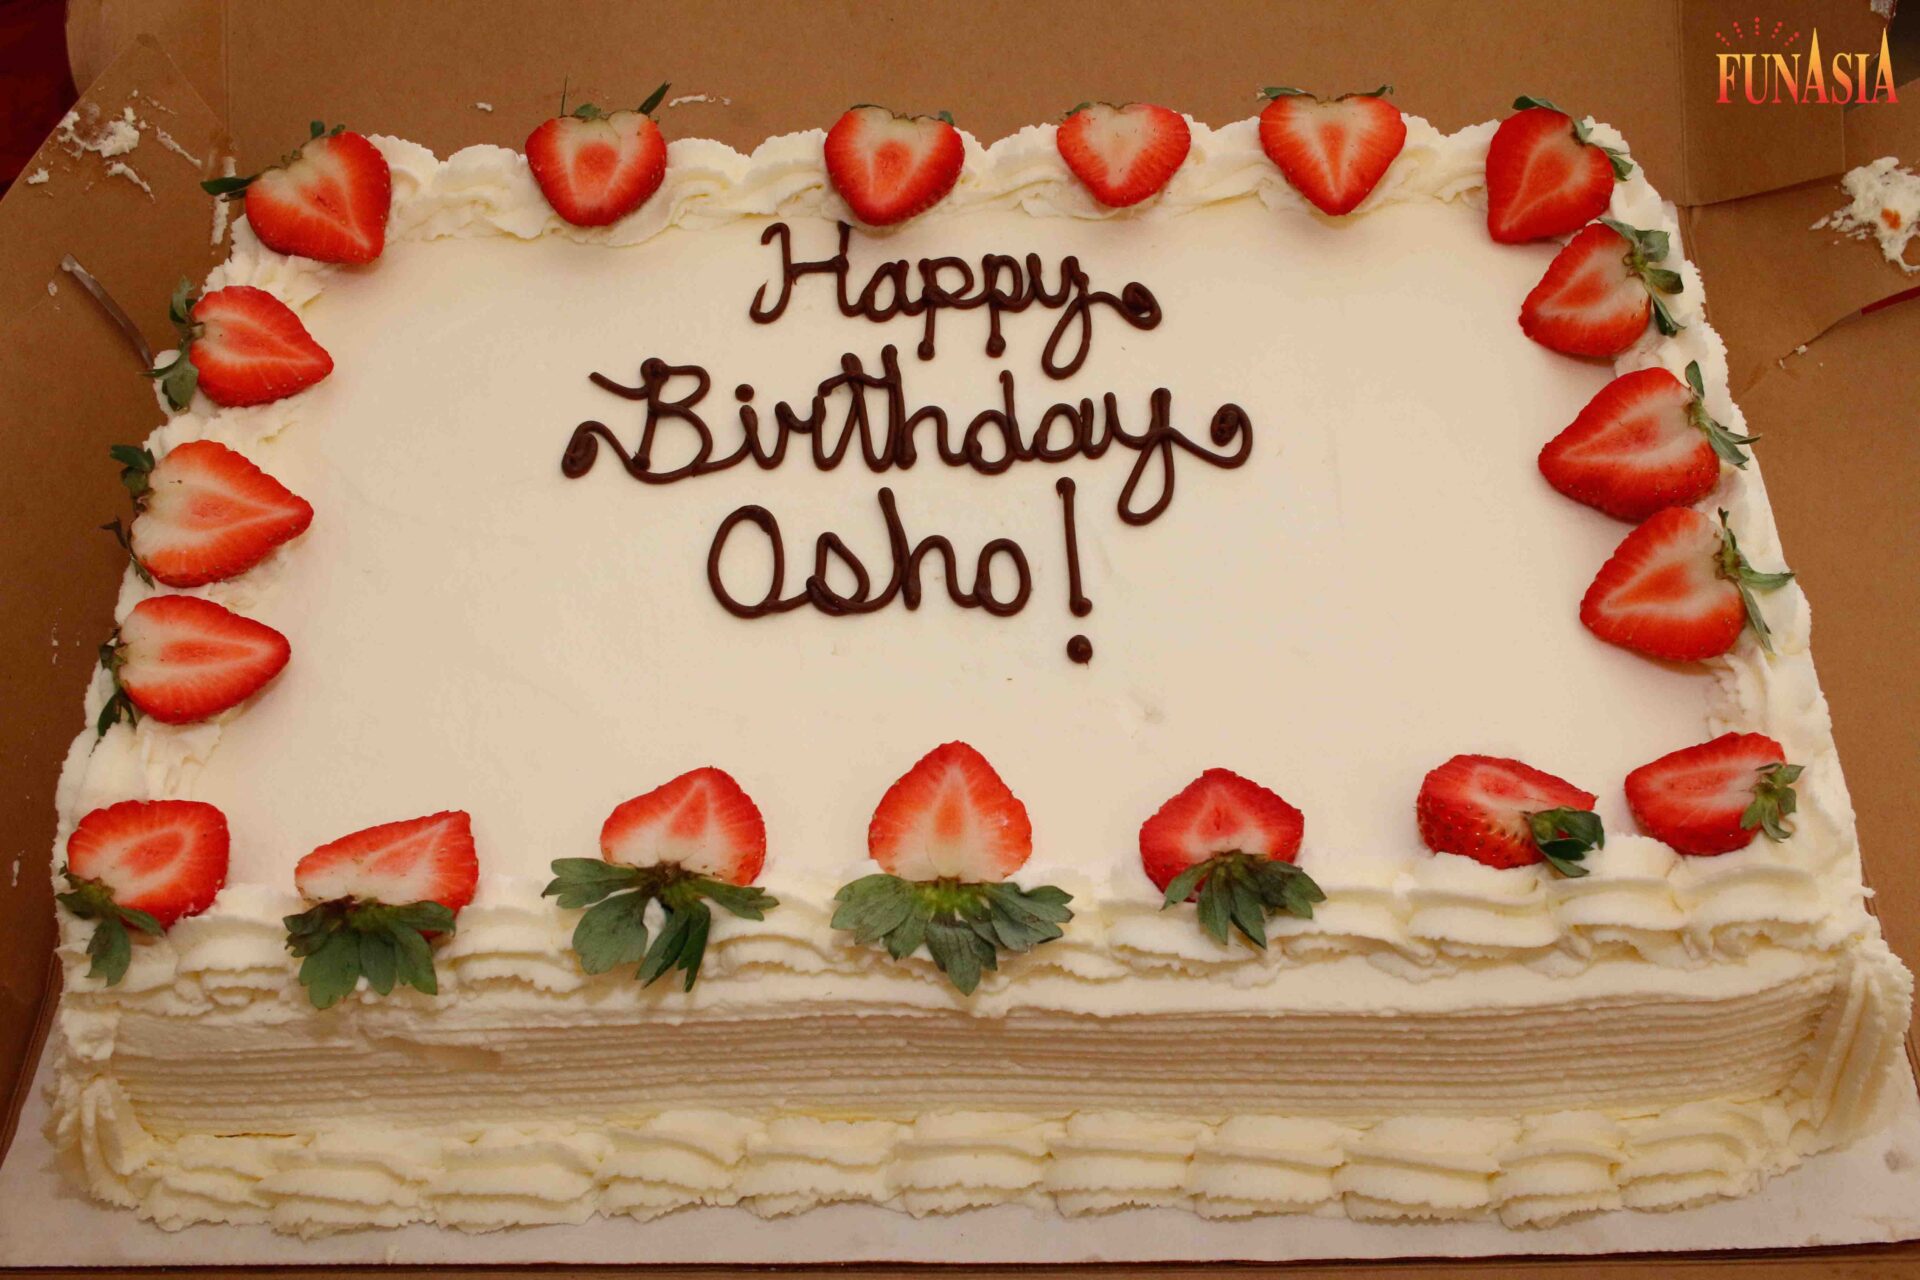 Osho’s Birthday Event